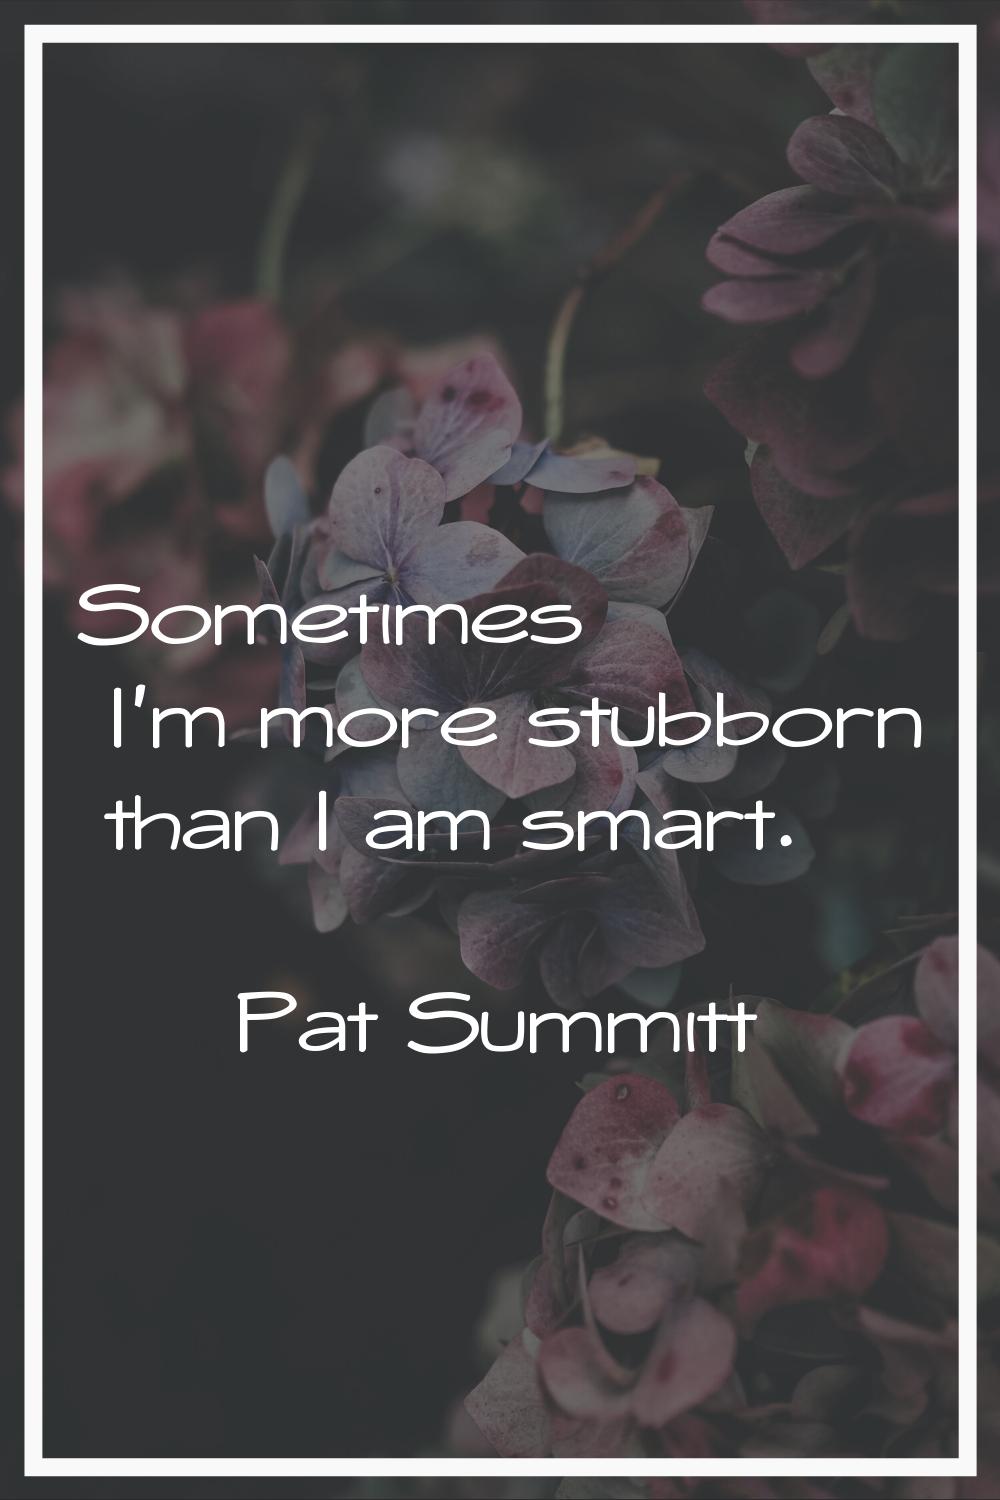 Sometimes I'm more stubborn than I am smart.